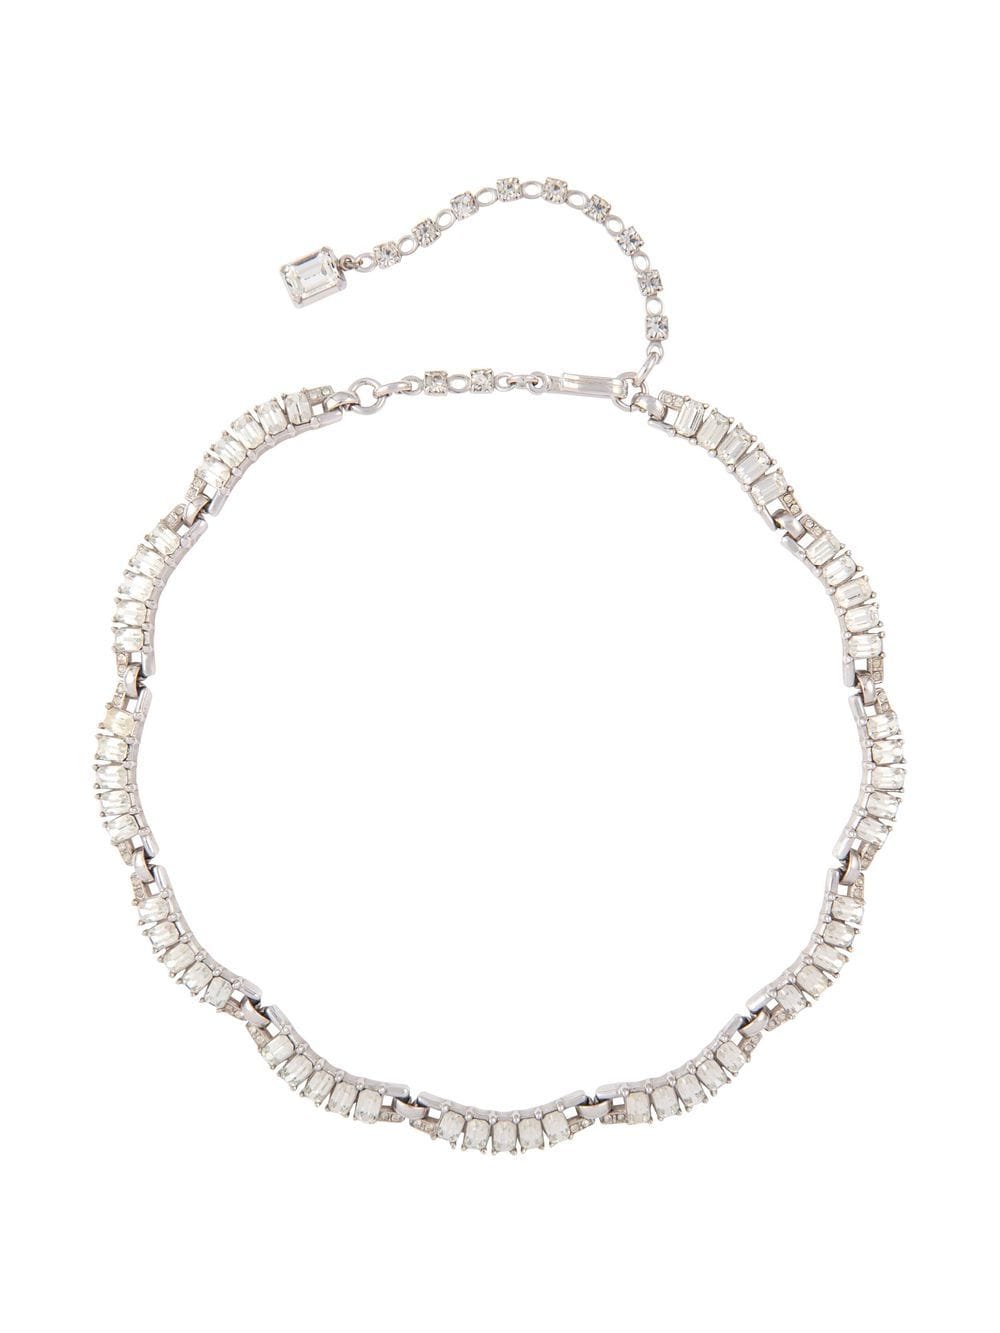 Pre-owned Susan Caplan Vintage 1960s Swarovski Crystal Necklace In Silver